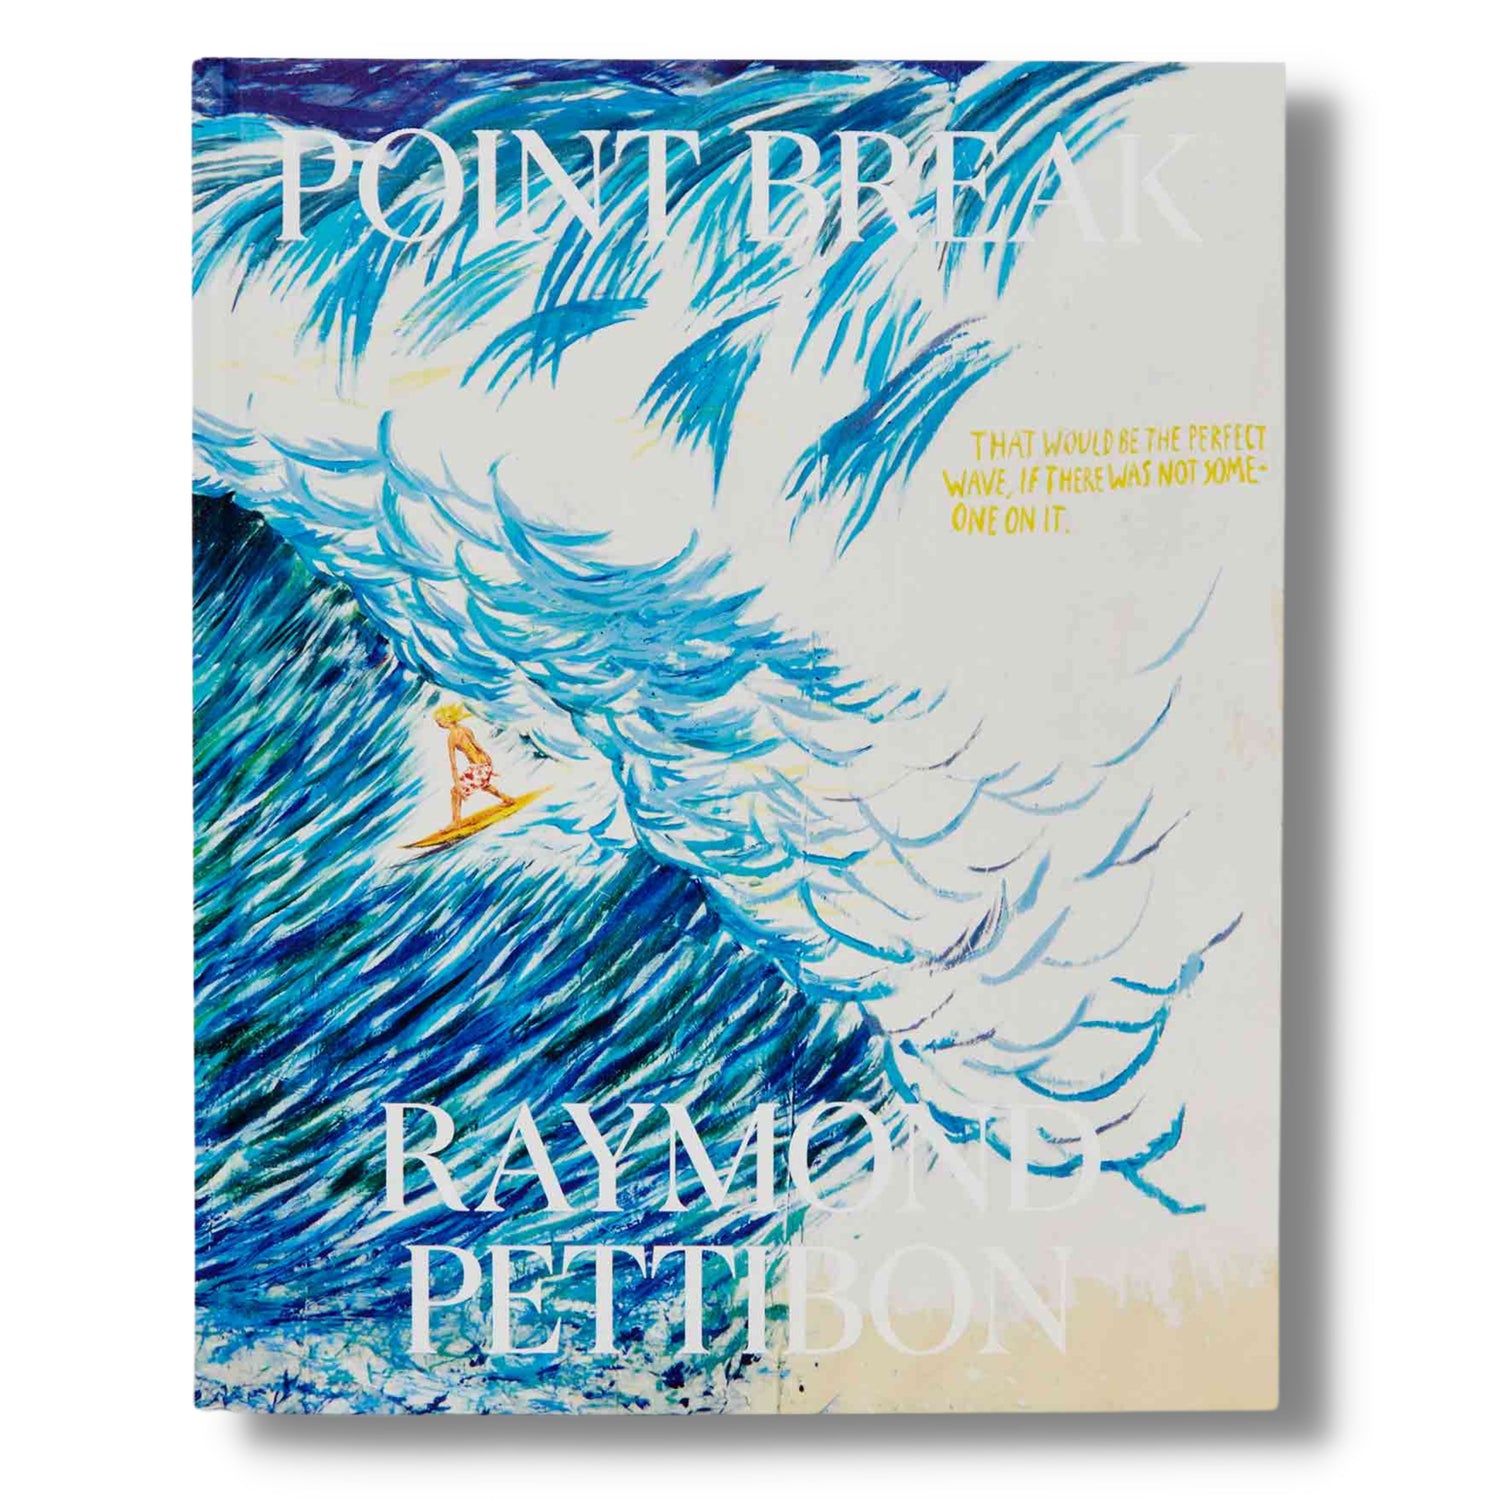 POINT BREAK - Raymond Pettibon, Surfers and Waves - REBEL FIN CO.